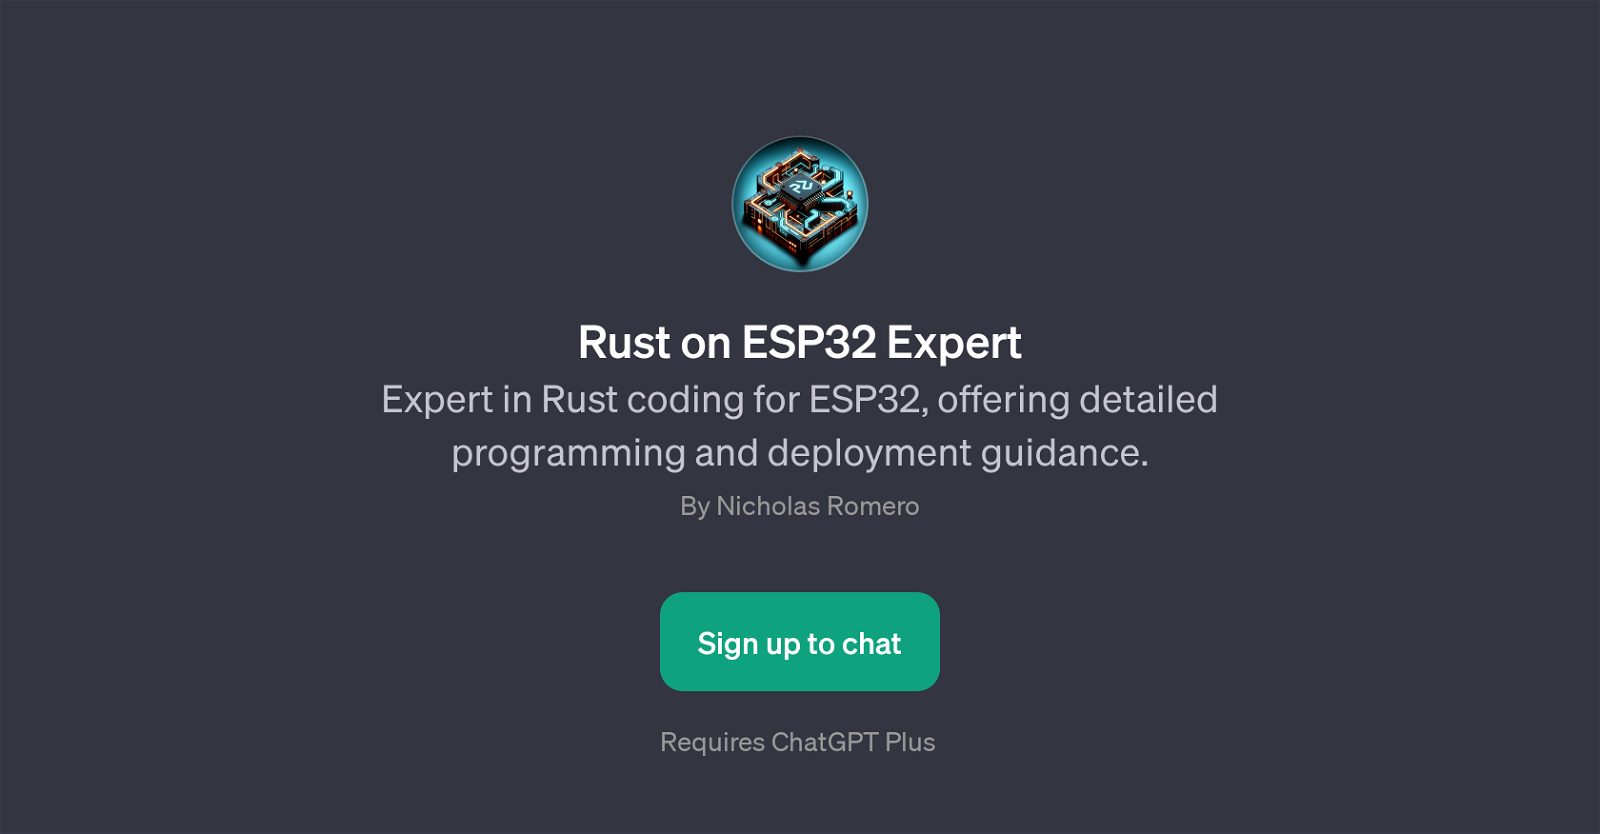 Rust on ESP32 Expert website